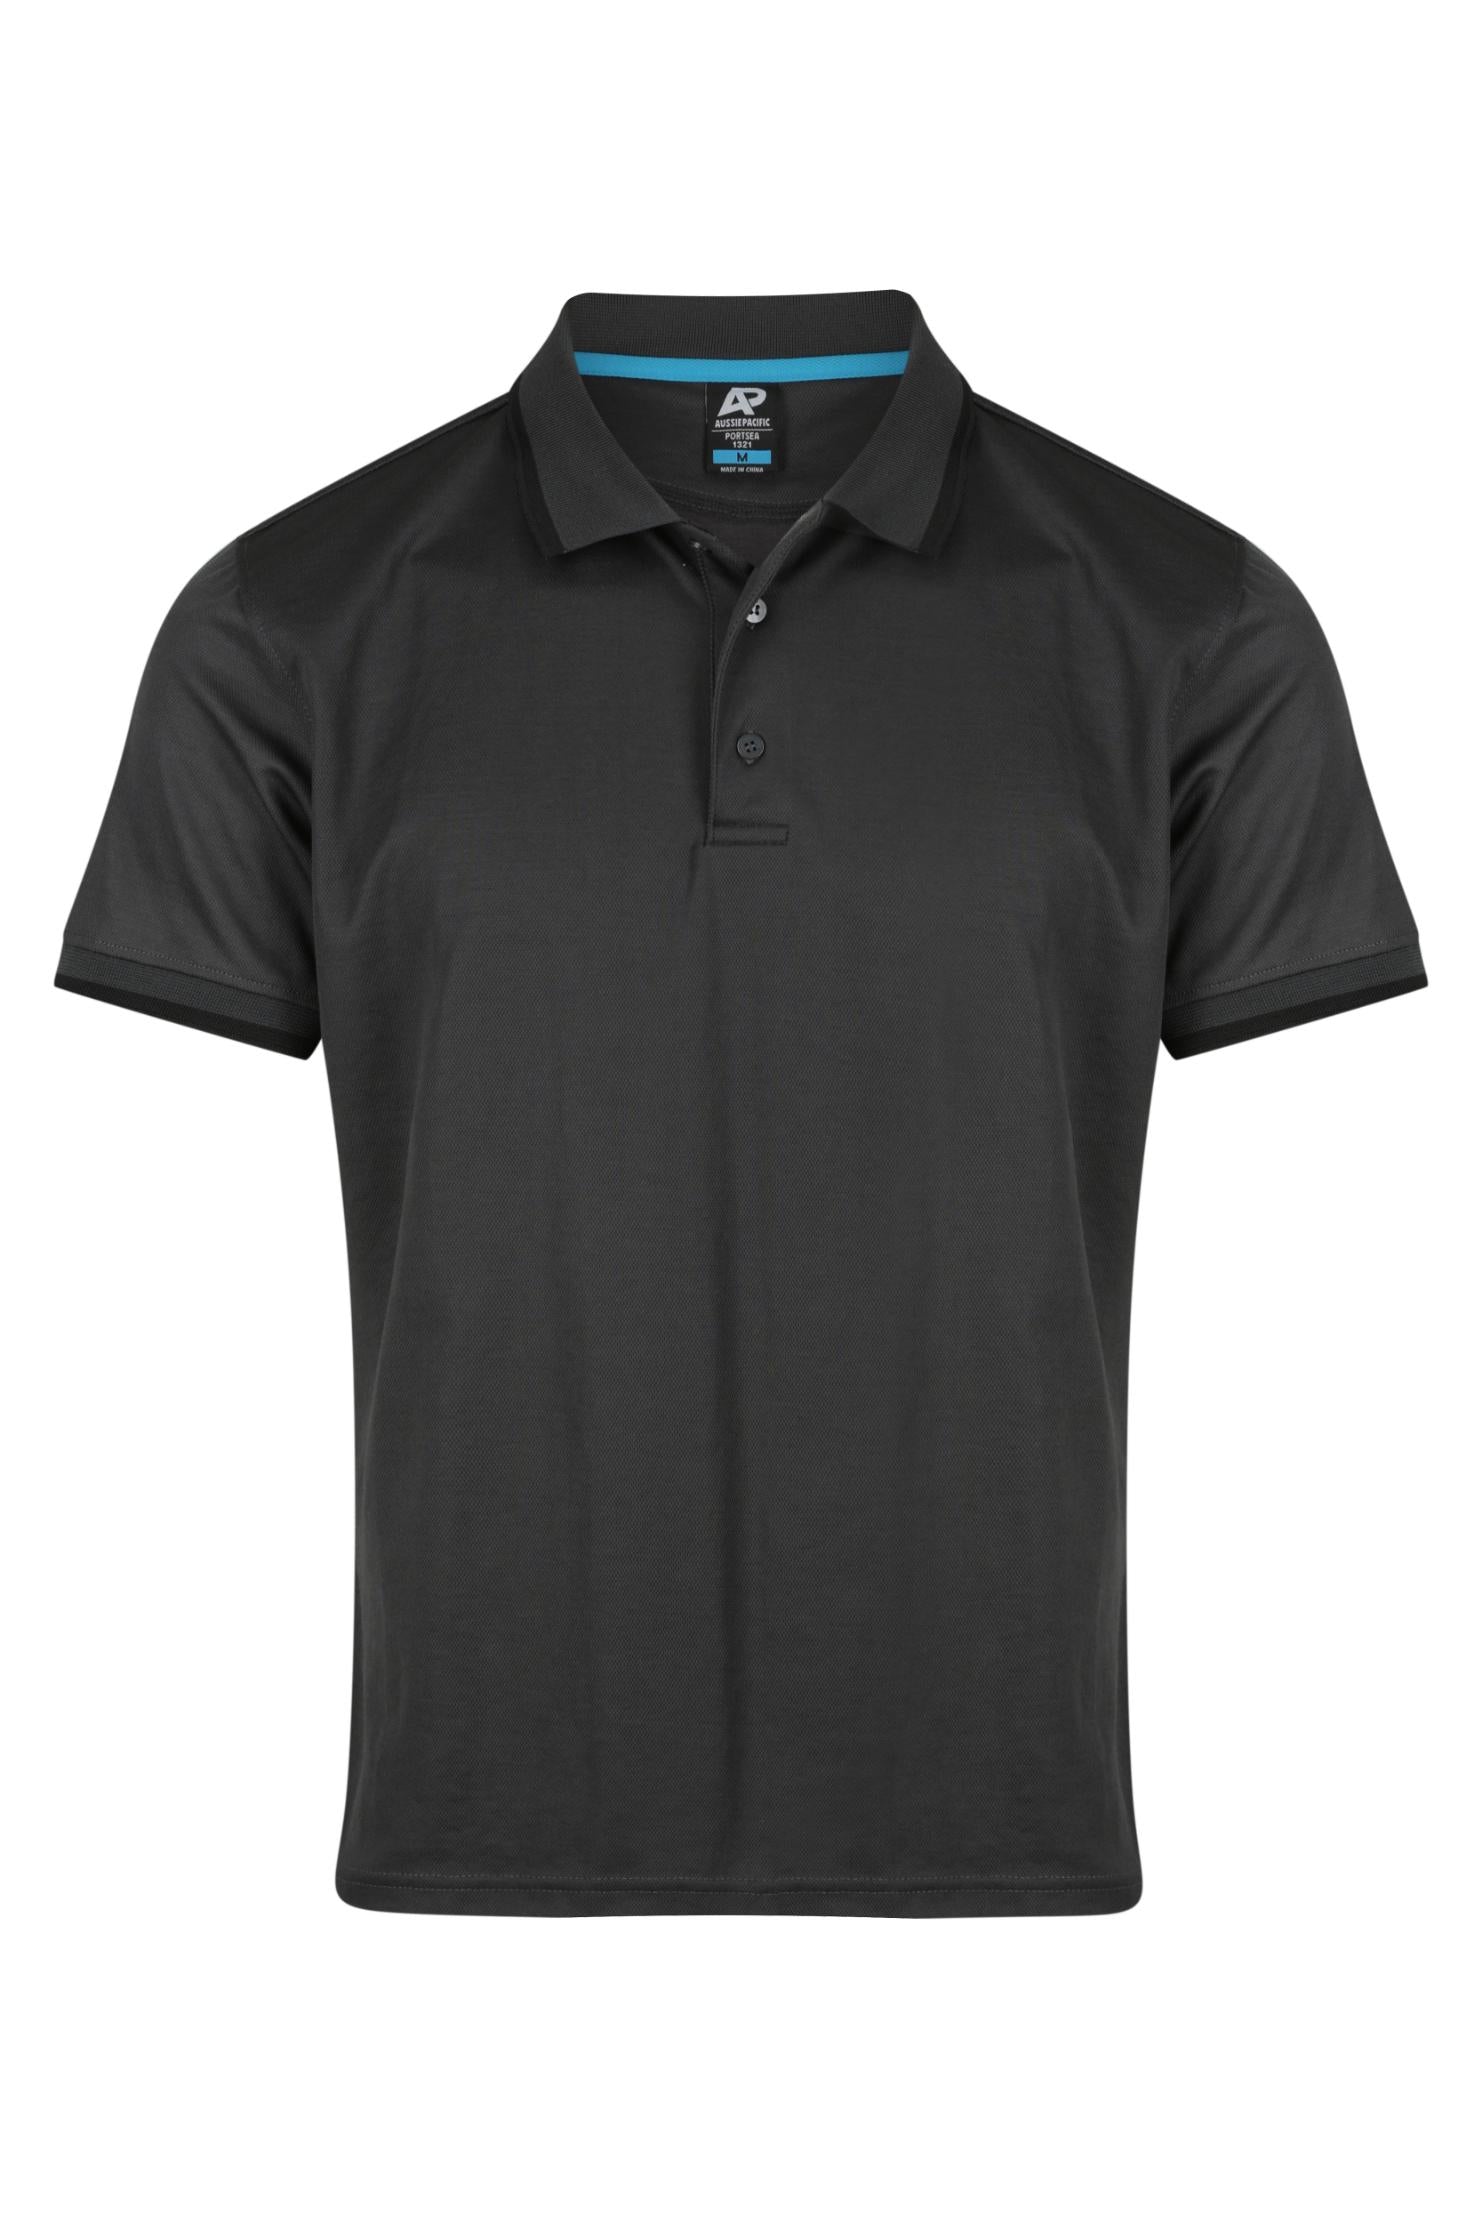 Custom Portsea Work Polo Shirts Australia - Slate/Black